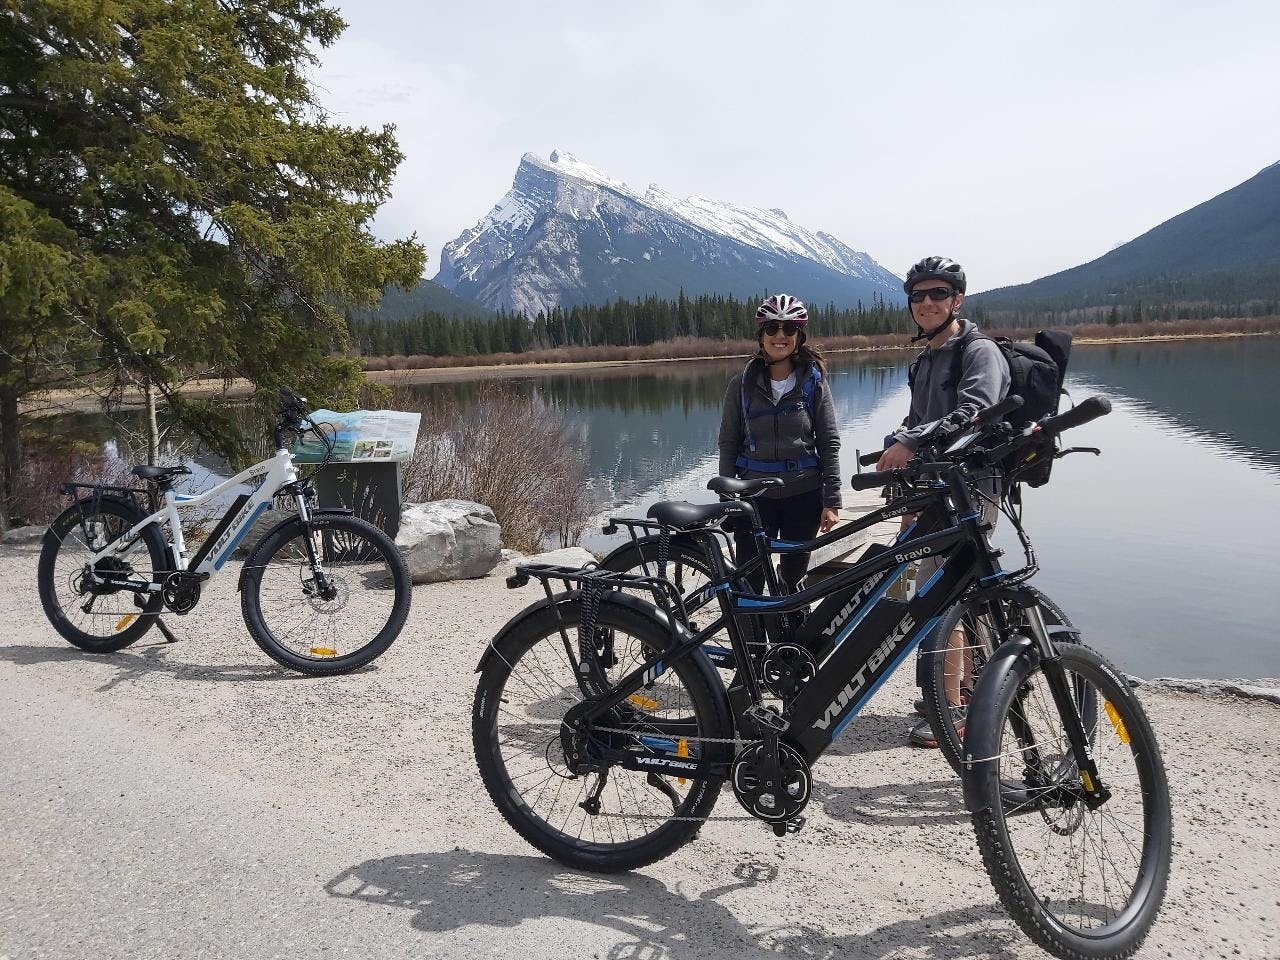 Banff Johnston Canyon e-bike and hiking tour